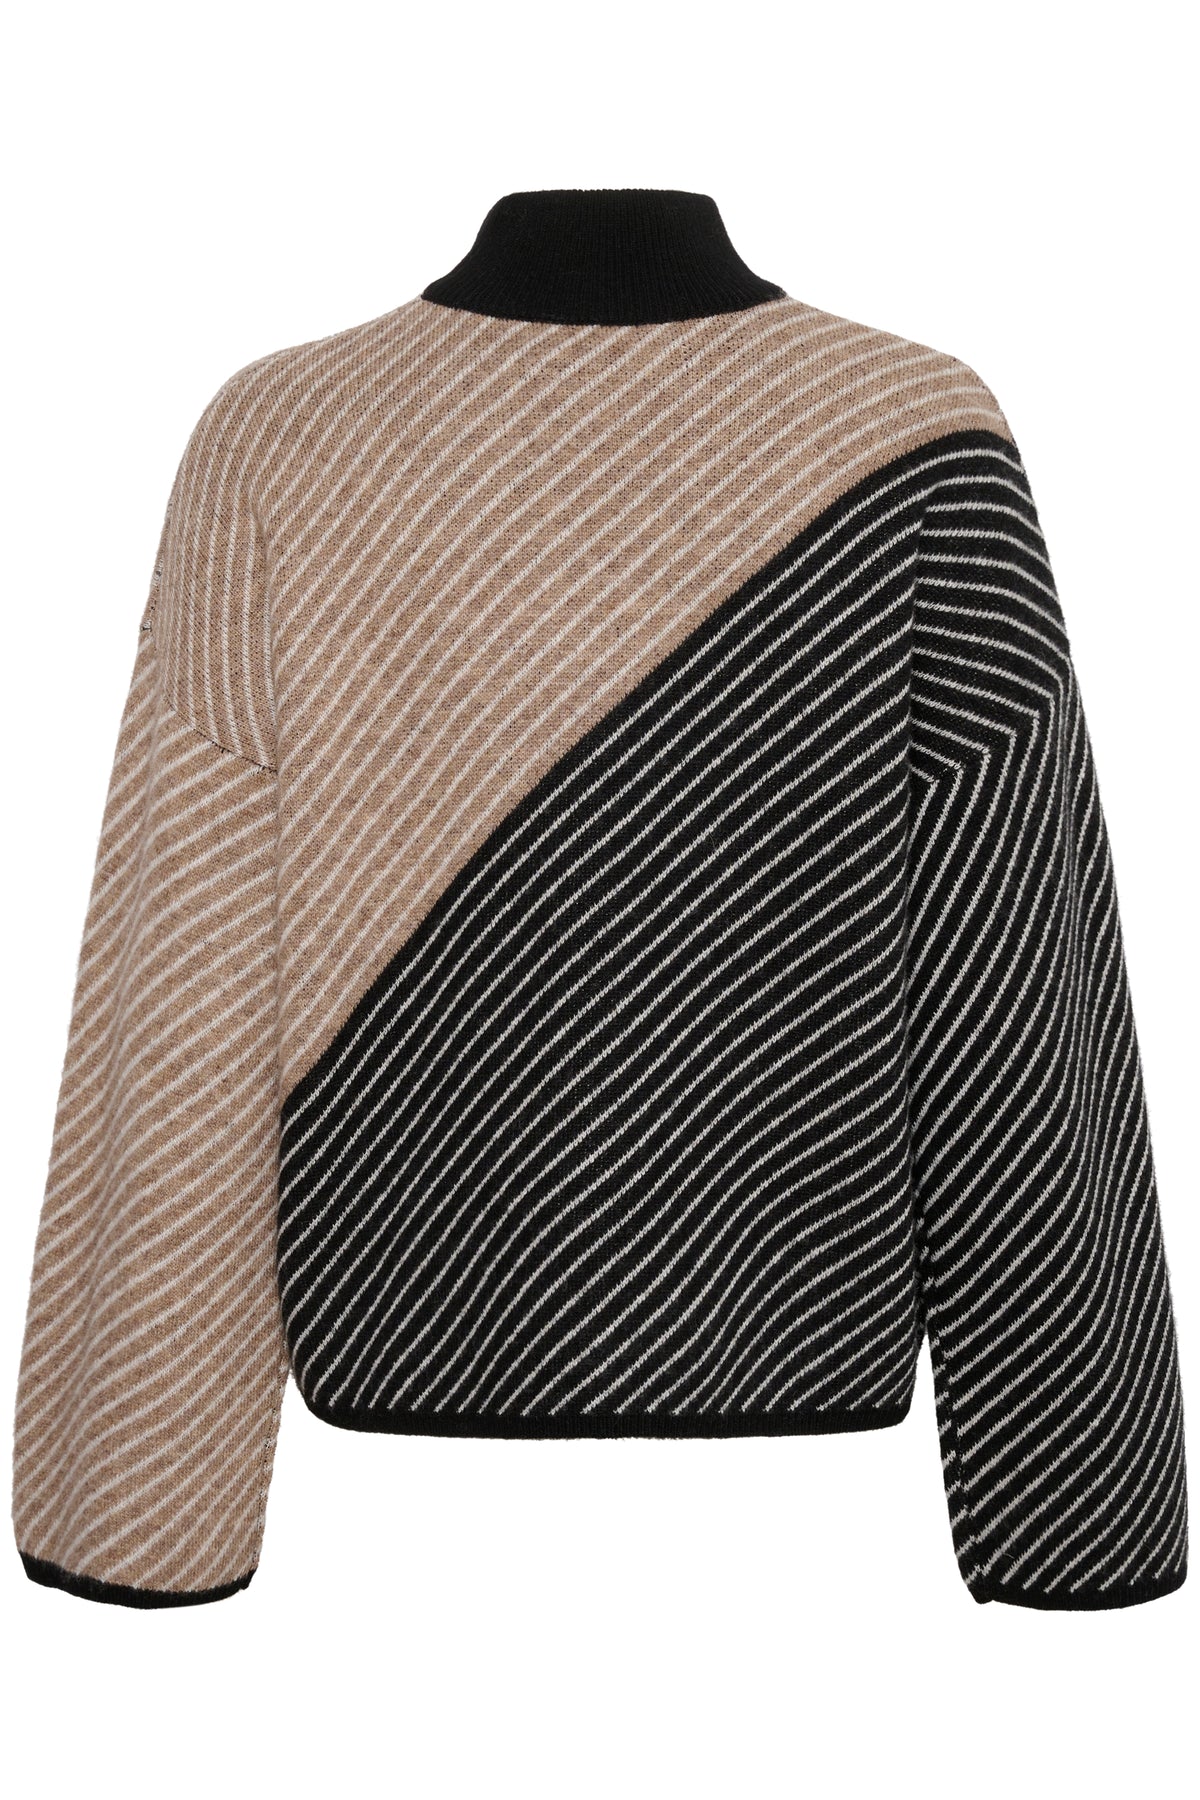 InWear Rance Mocha Grey/Black Oversized Knitted Pullover, 30108598